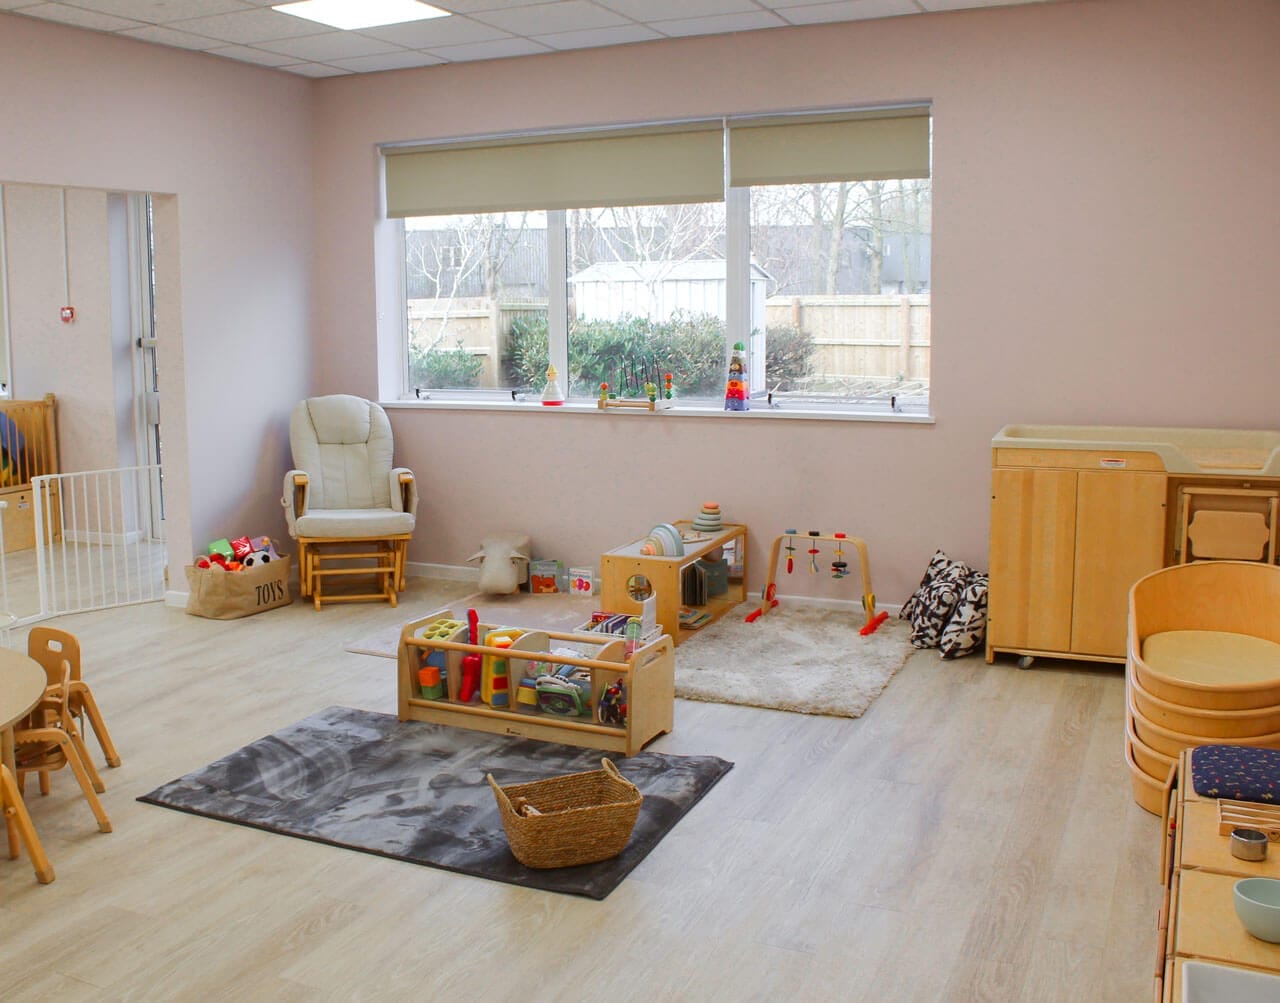 childcare nursery in uk